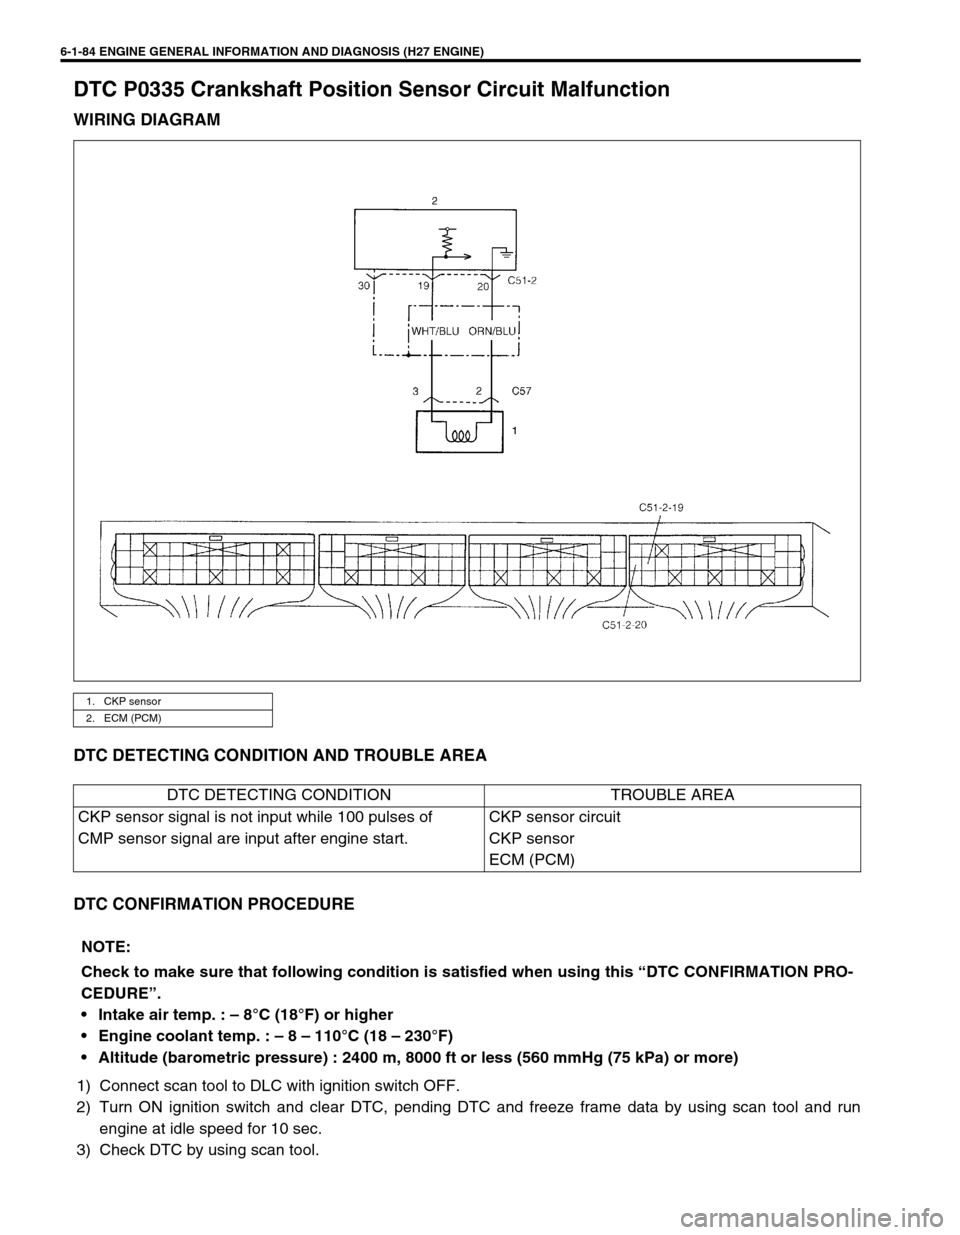 SUZUKI GRAND VITARA 2001 2.G Repair Manual 6-1-84 ENGINE GENERAL INFORMATION AND DIAGNOSIS (H27 ENGINE)
DTC P0335 Crankshaft Position Sensor Circuit Malfunction
WIRING DIAGRAM
DTC DETECTING CONDITION AND TROUBLE AREA
DTC CONFIRMATION PROCEDURE